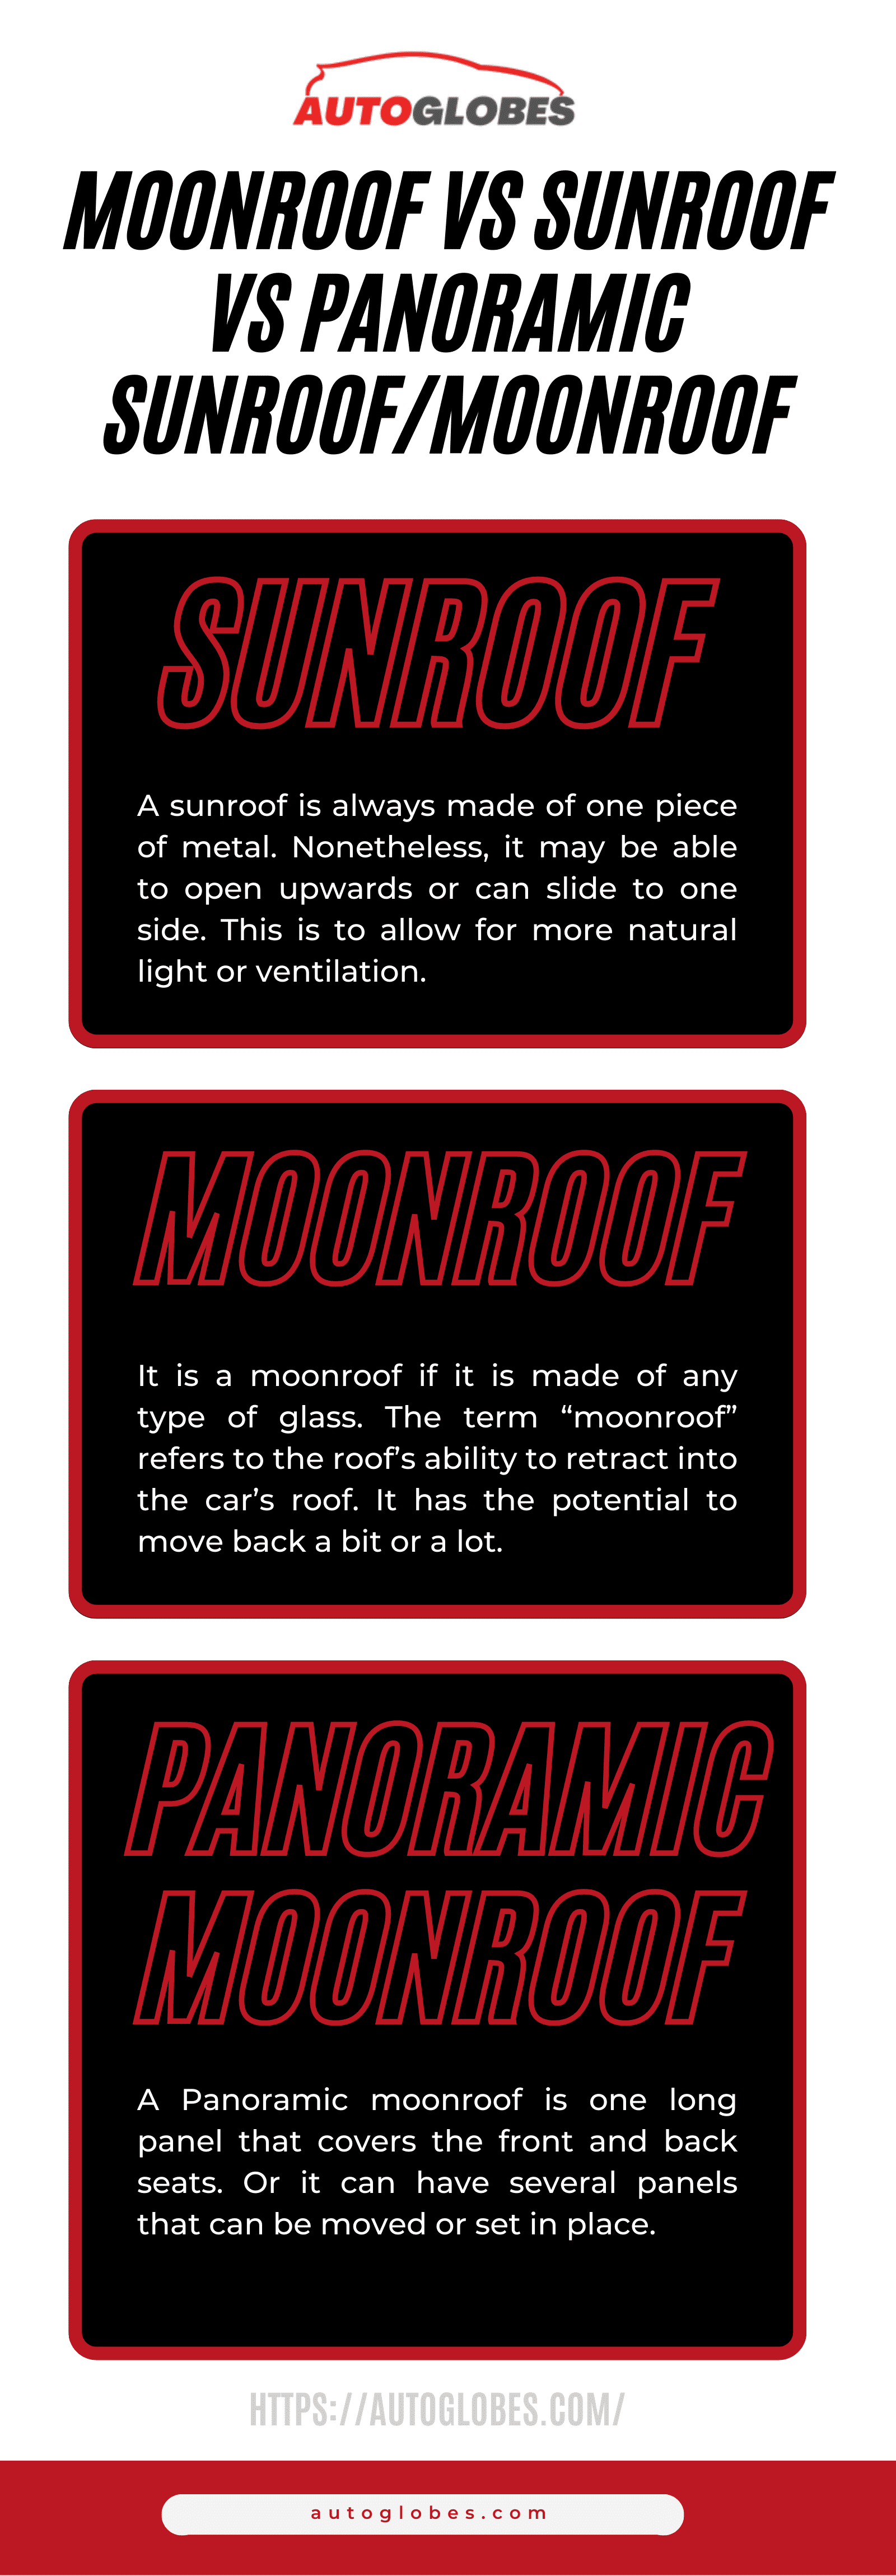 Moonroof vs Sunroof vs Panoramic Sunroof moonroof infographic